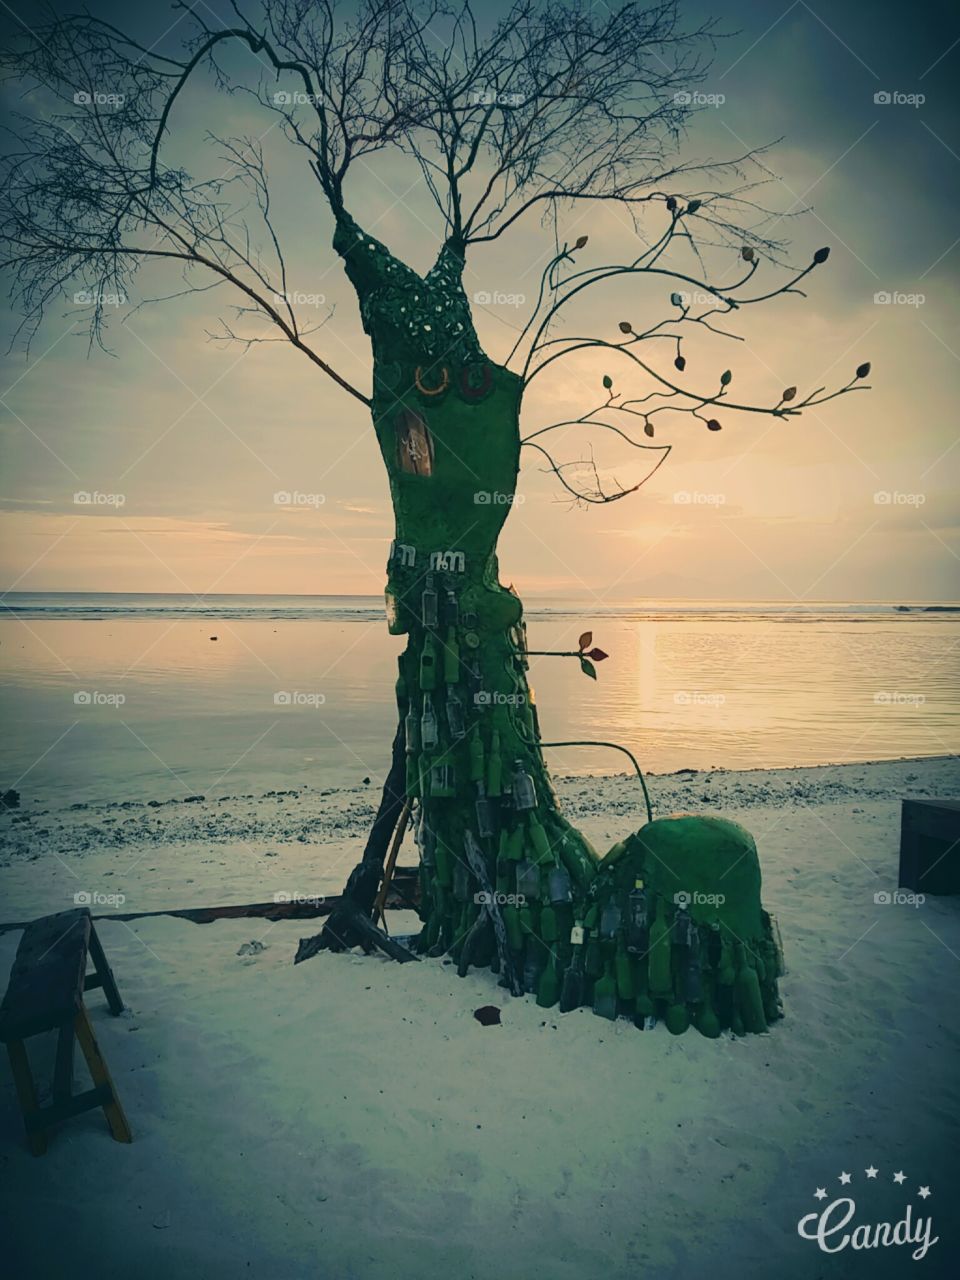 Tree Art
#gilitrawangan #indonesia #summers #beachlife #beach #sand #sunset #bachelorette #trees #woods